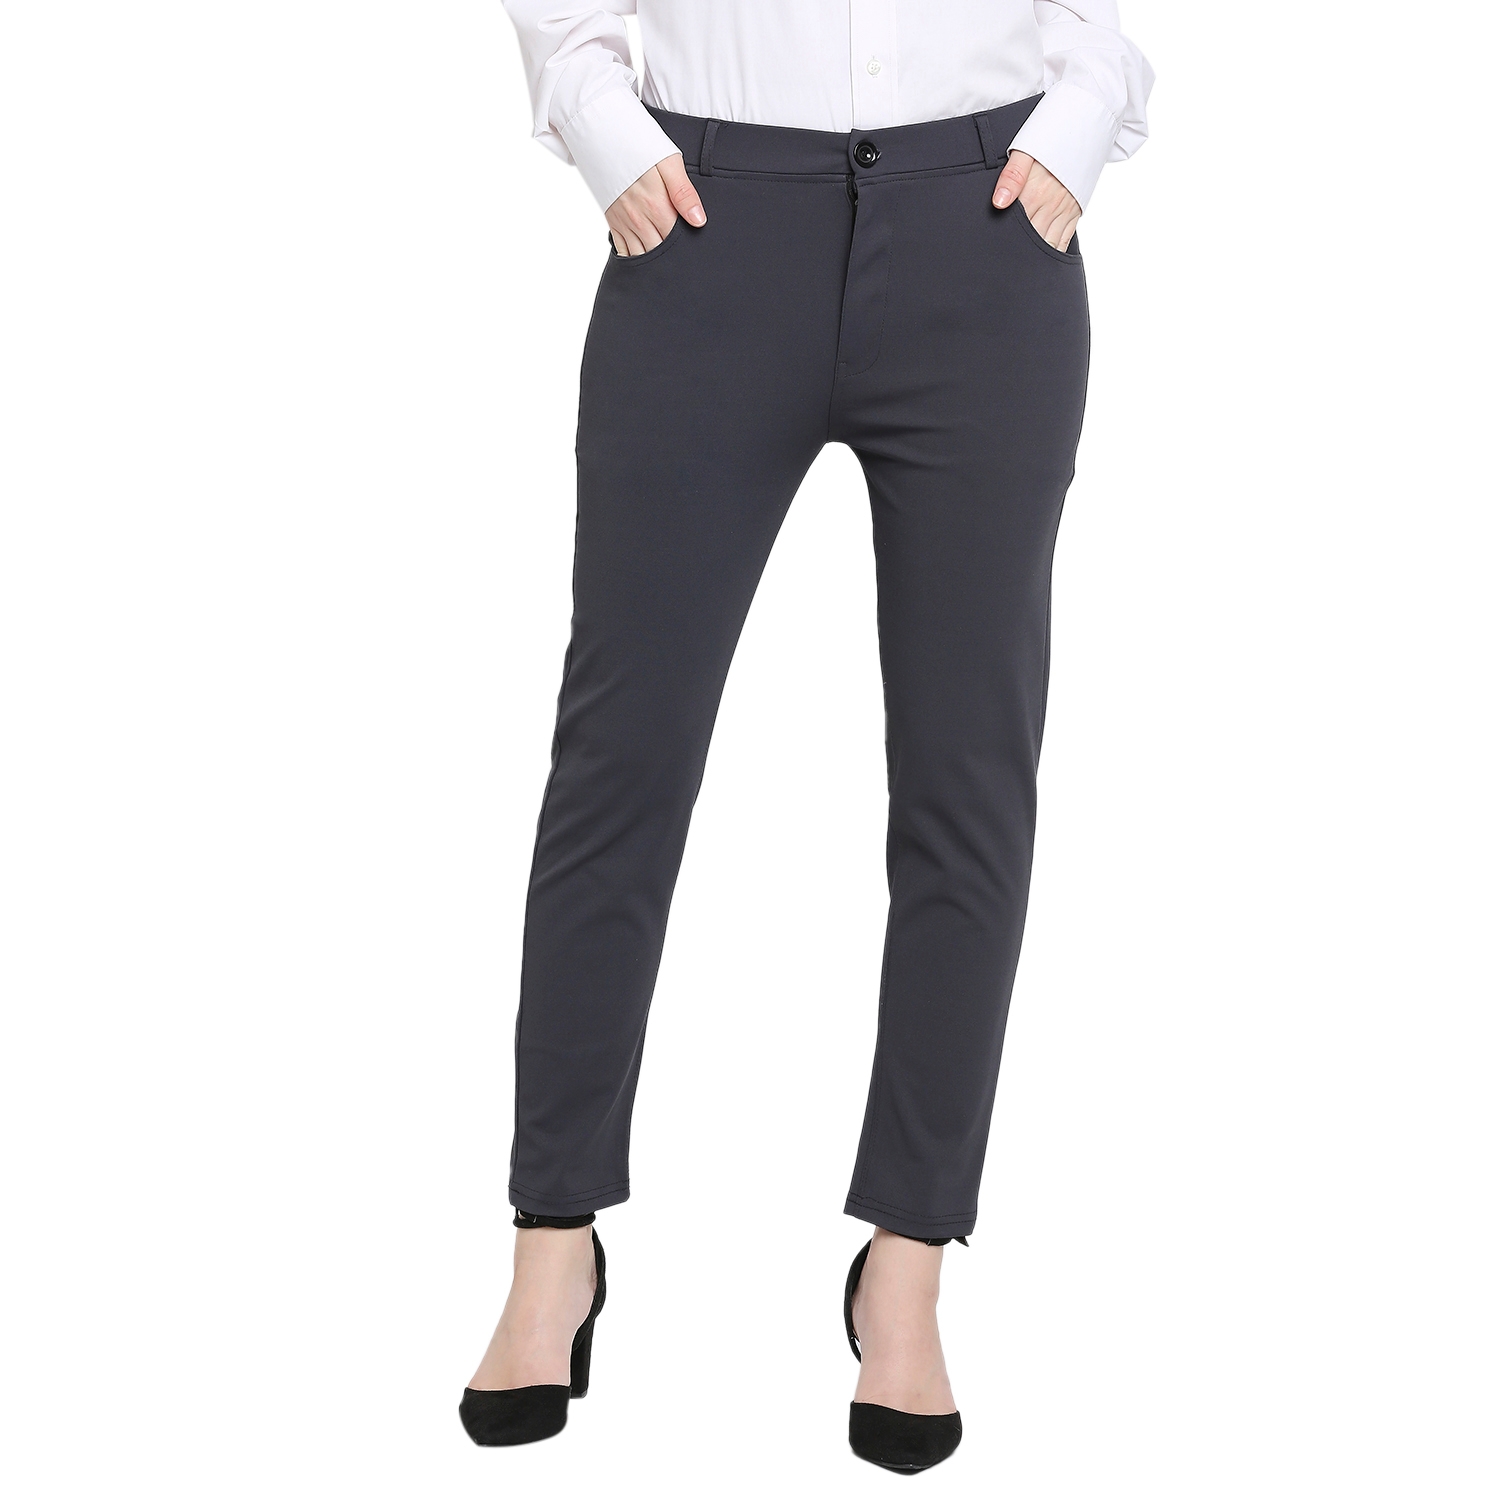 Buy Charcoal Grey Trousers  Pants for Women by Uniquest Online  Ajiocom